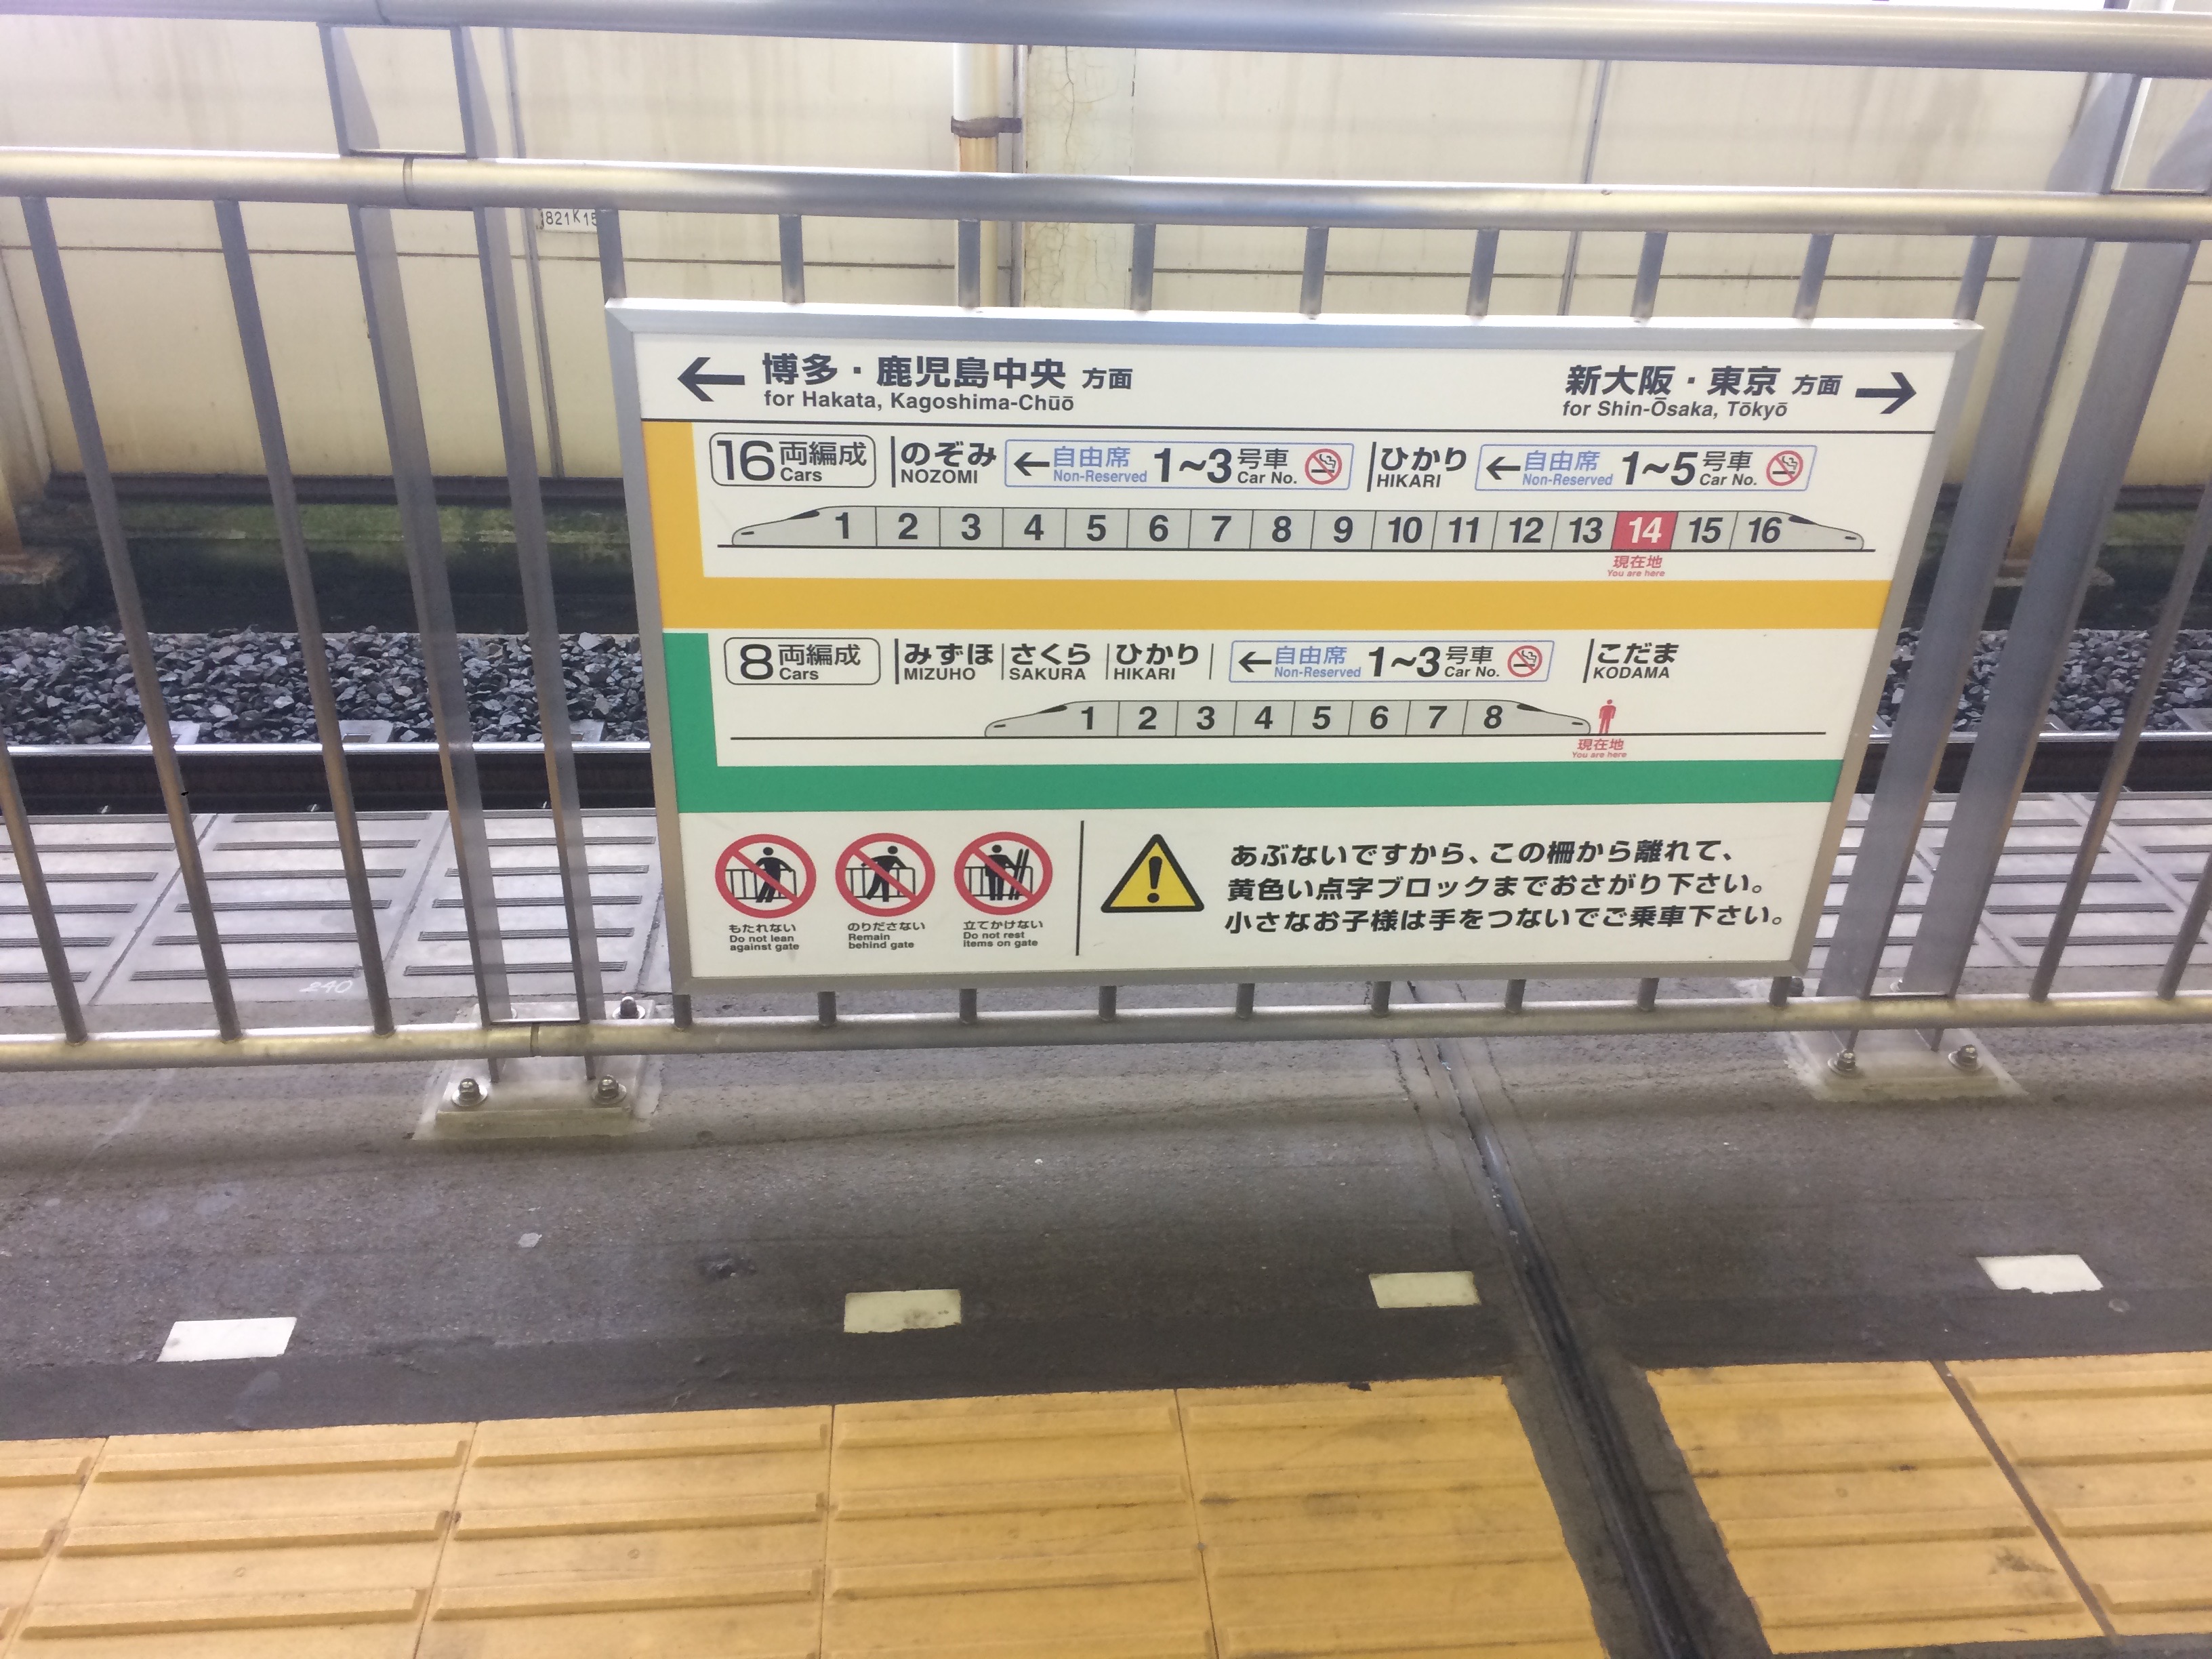 a sign on a rail